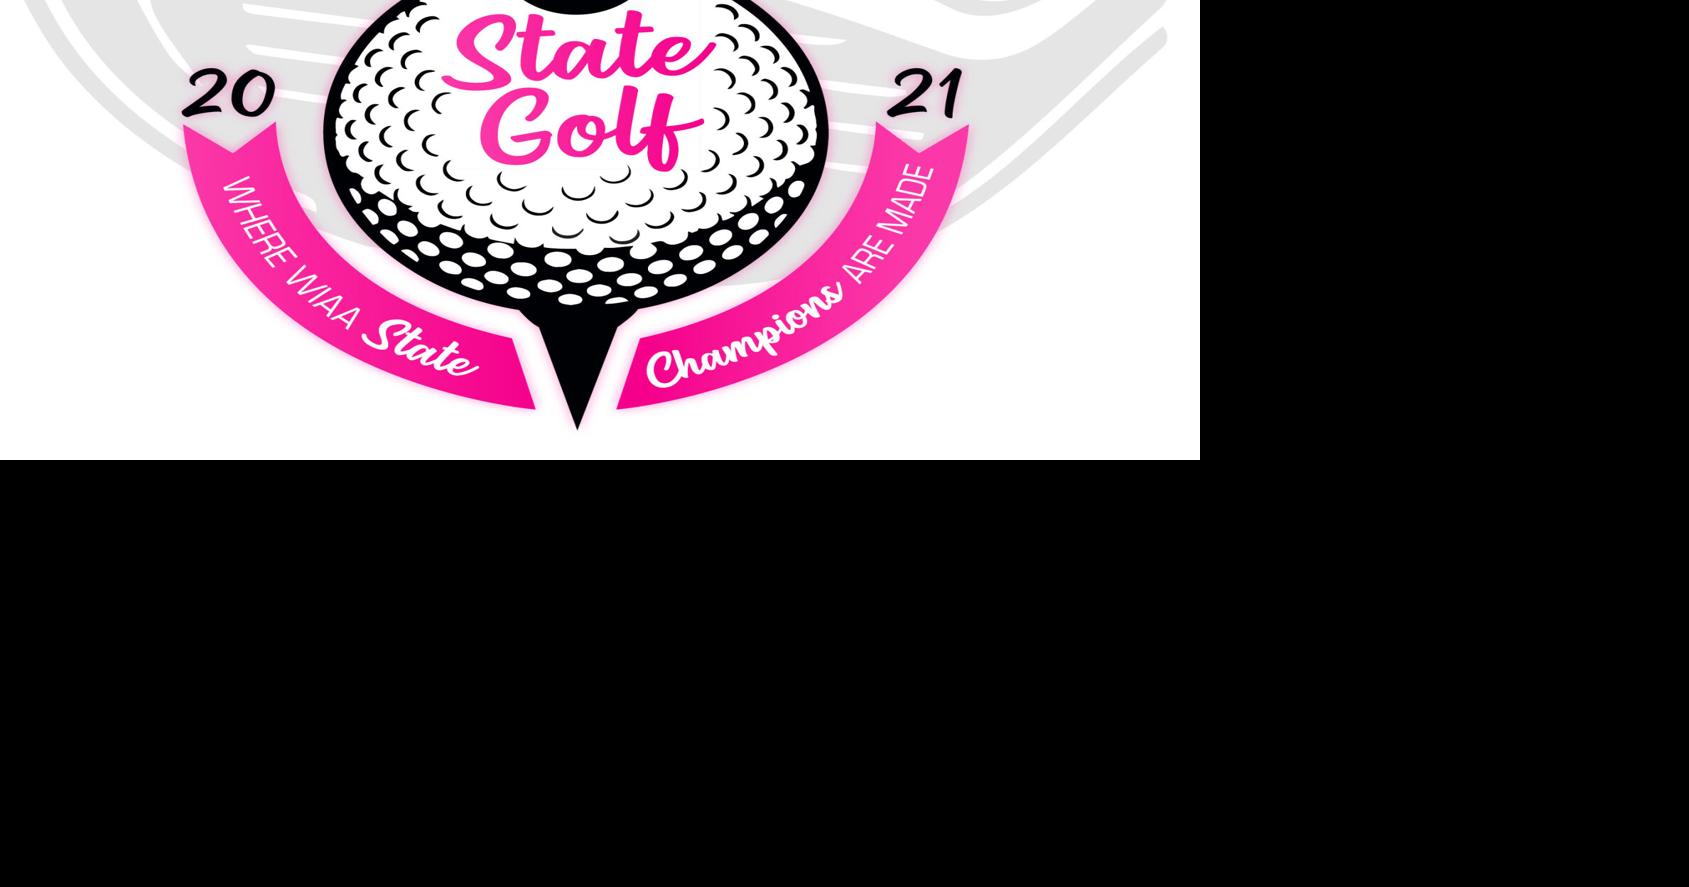 Live Updates WIAA girls golf sectional championships wisconsin.golf